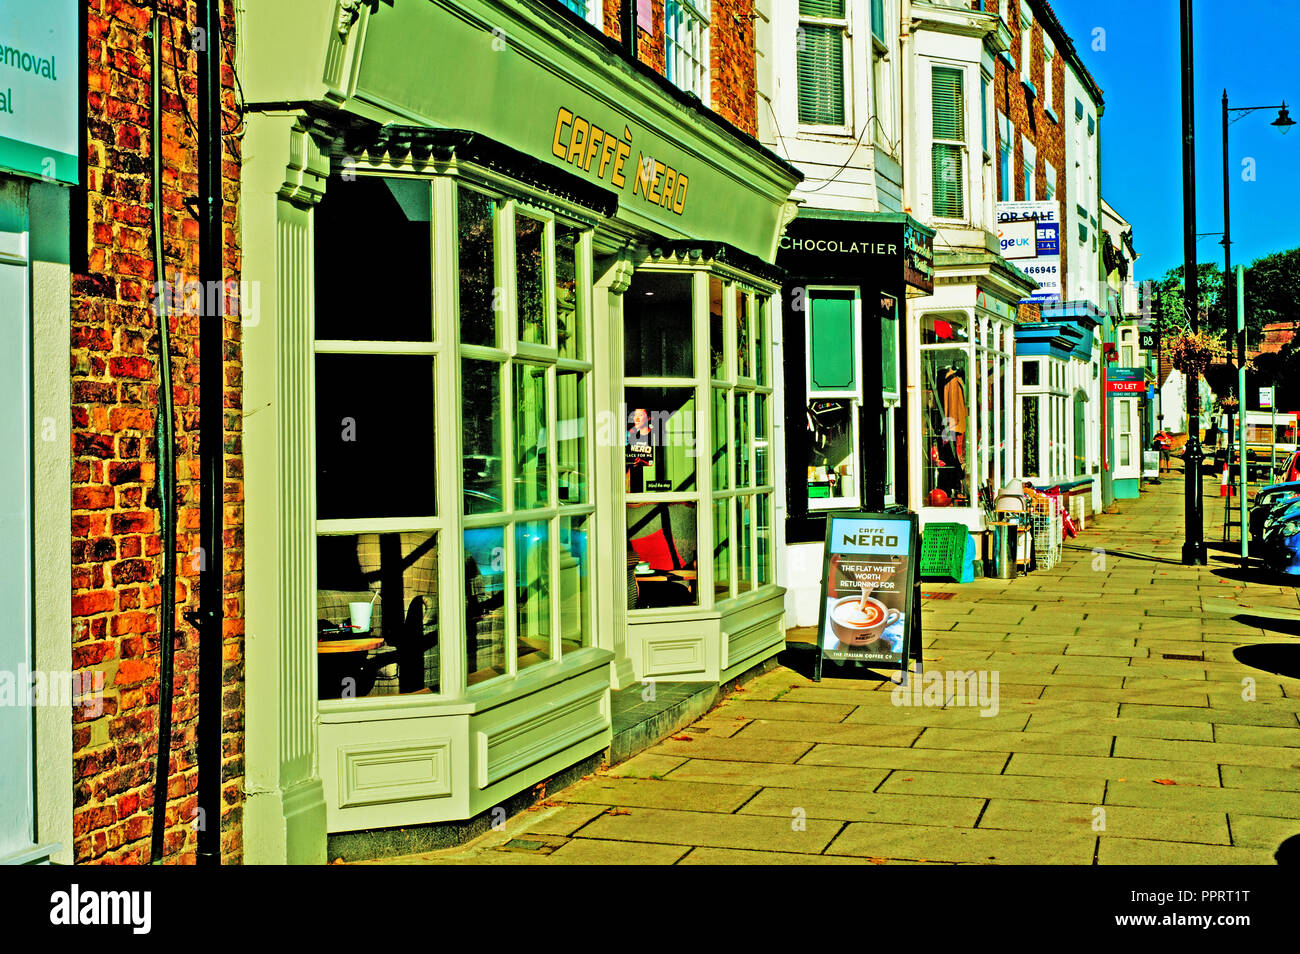 Cafe Nero e negozi, High Street, Yarm on Tees, Nord Est Inghilterra Foto Stock